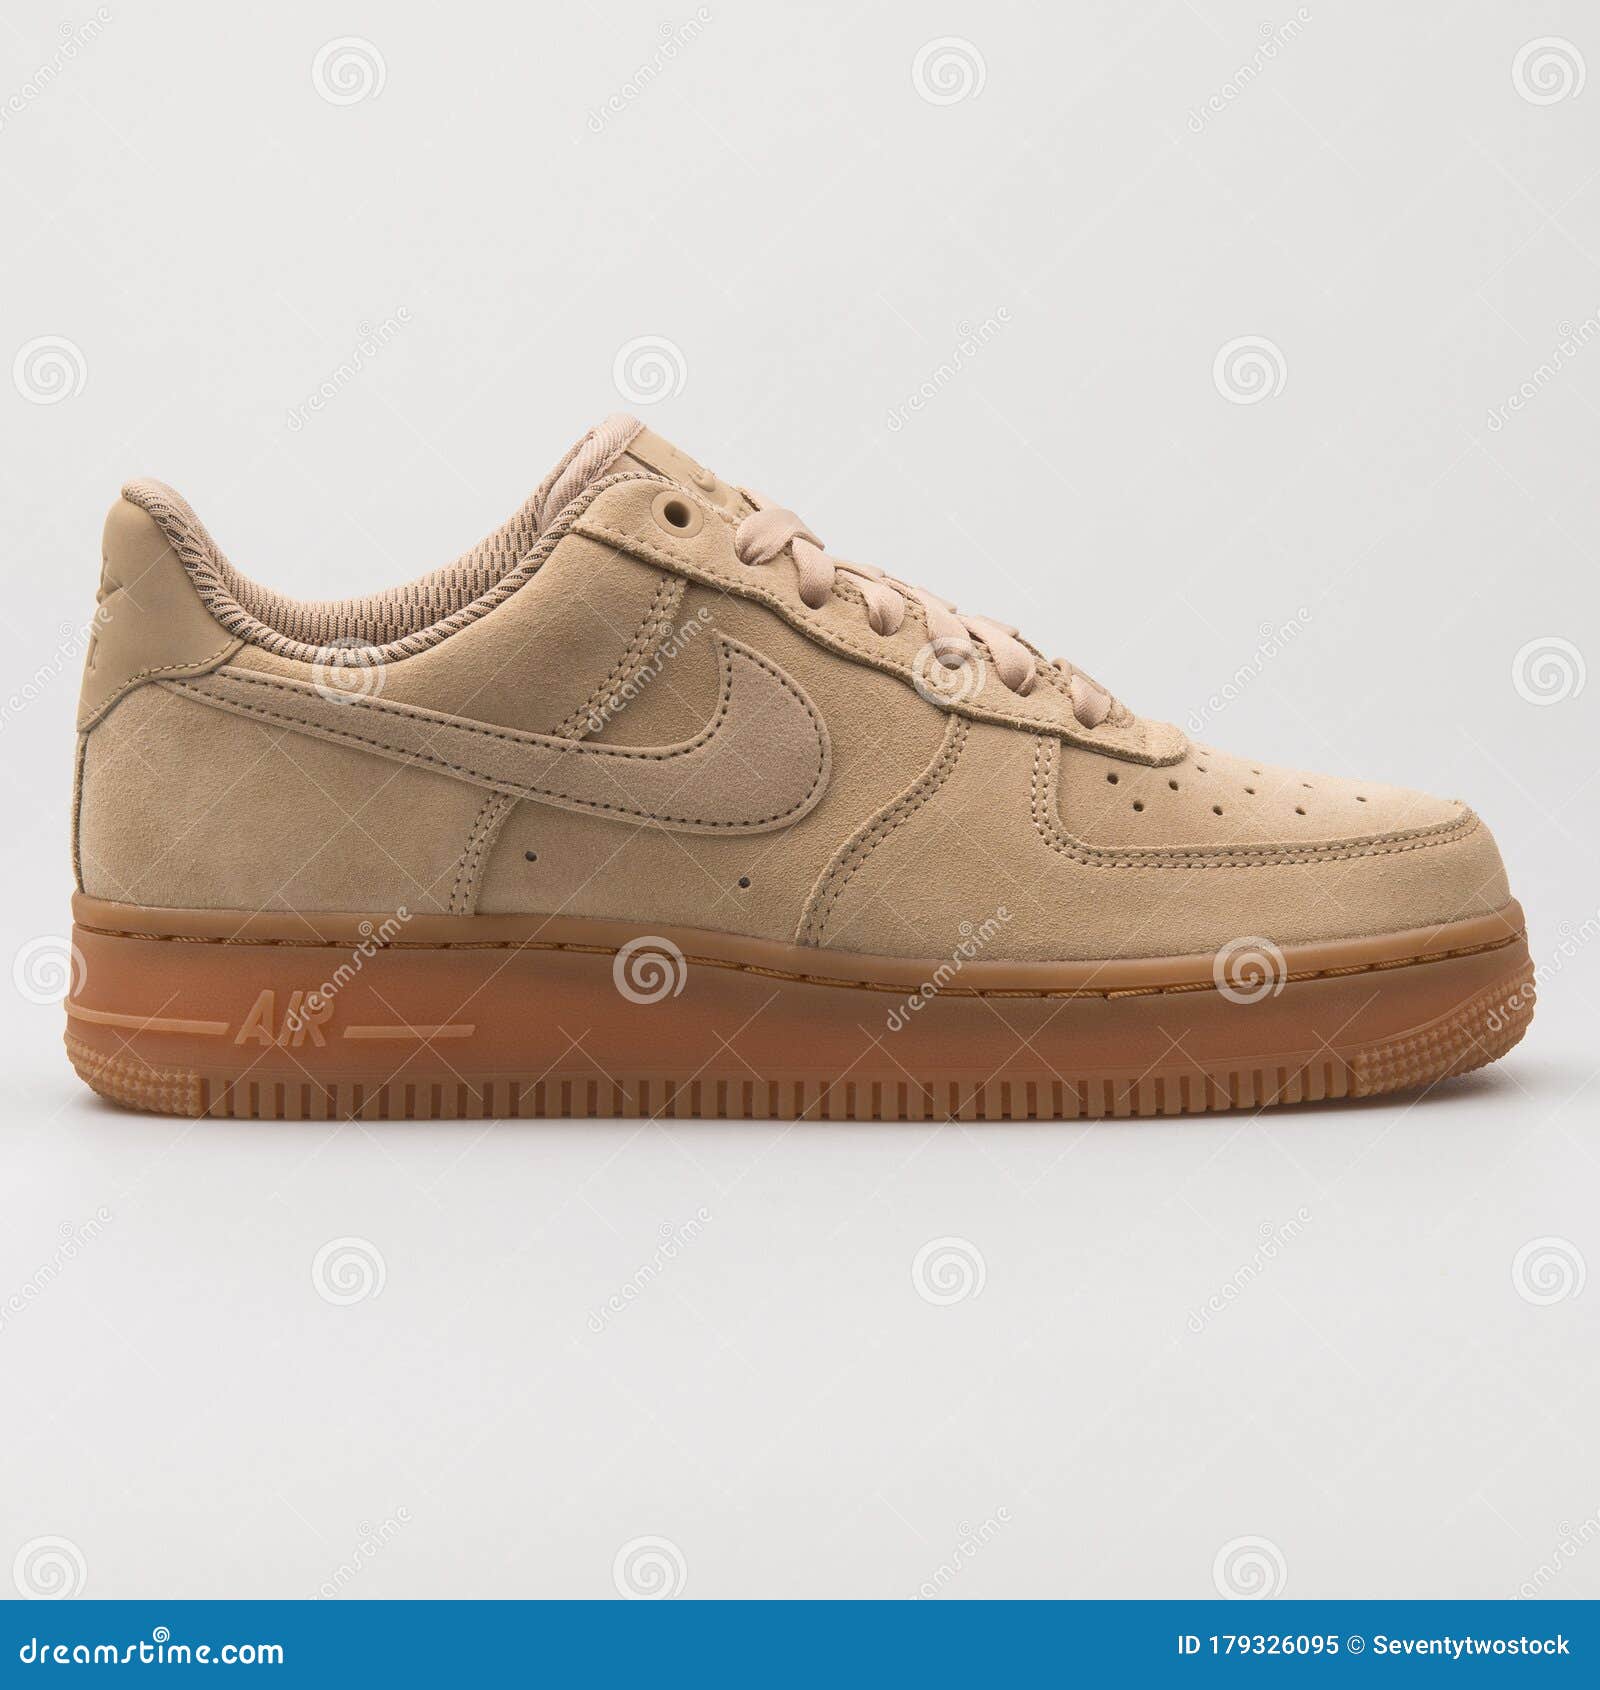 Nike Air 1 07 Suede Khaki Sneaker Imagen editorial - Imagen de objeto, zapatos: 179326095